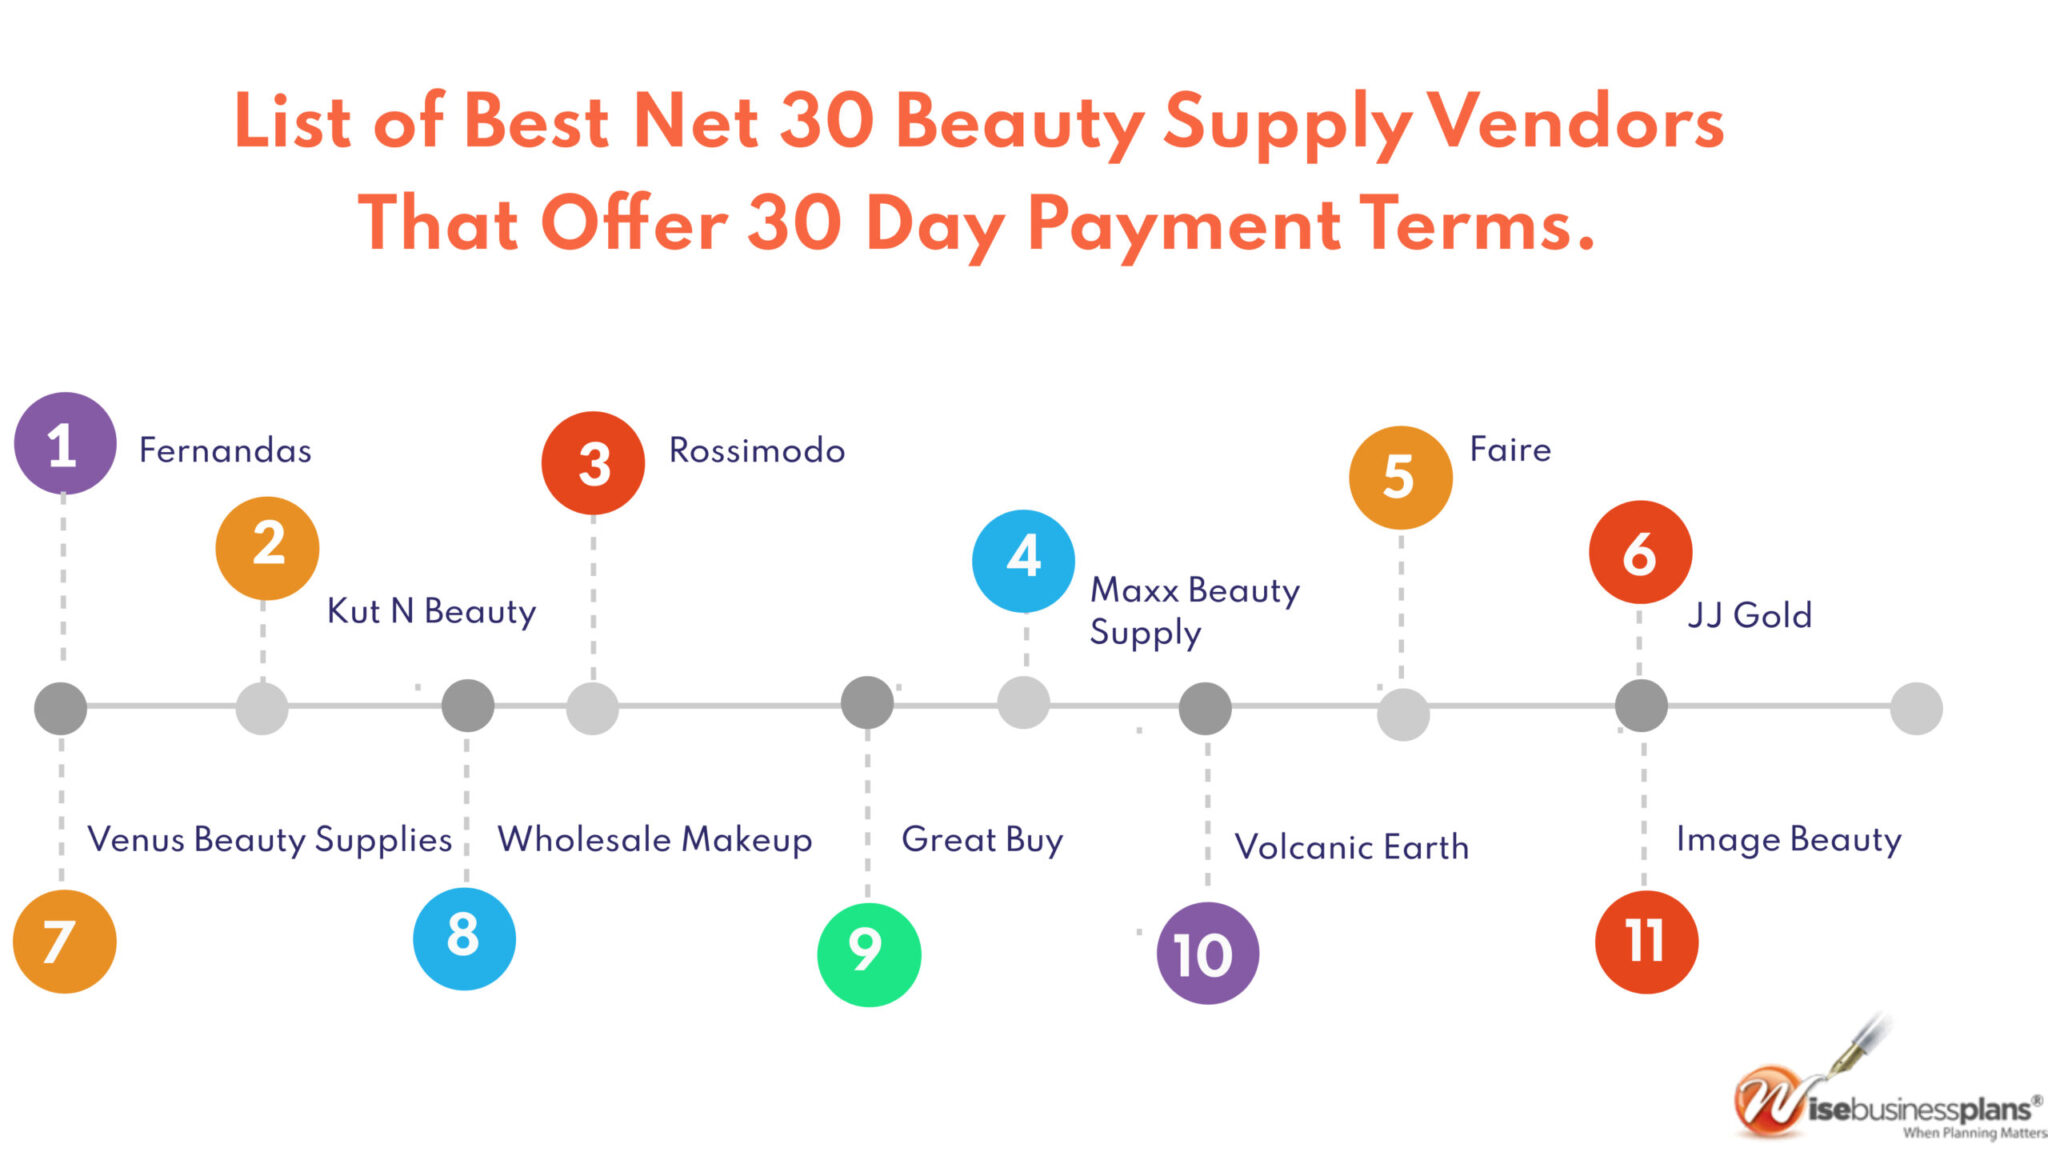 Net 30 Beauty Supply Vendors for 2023